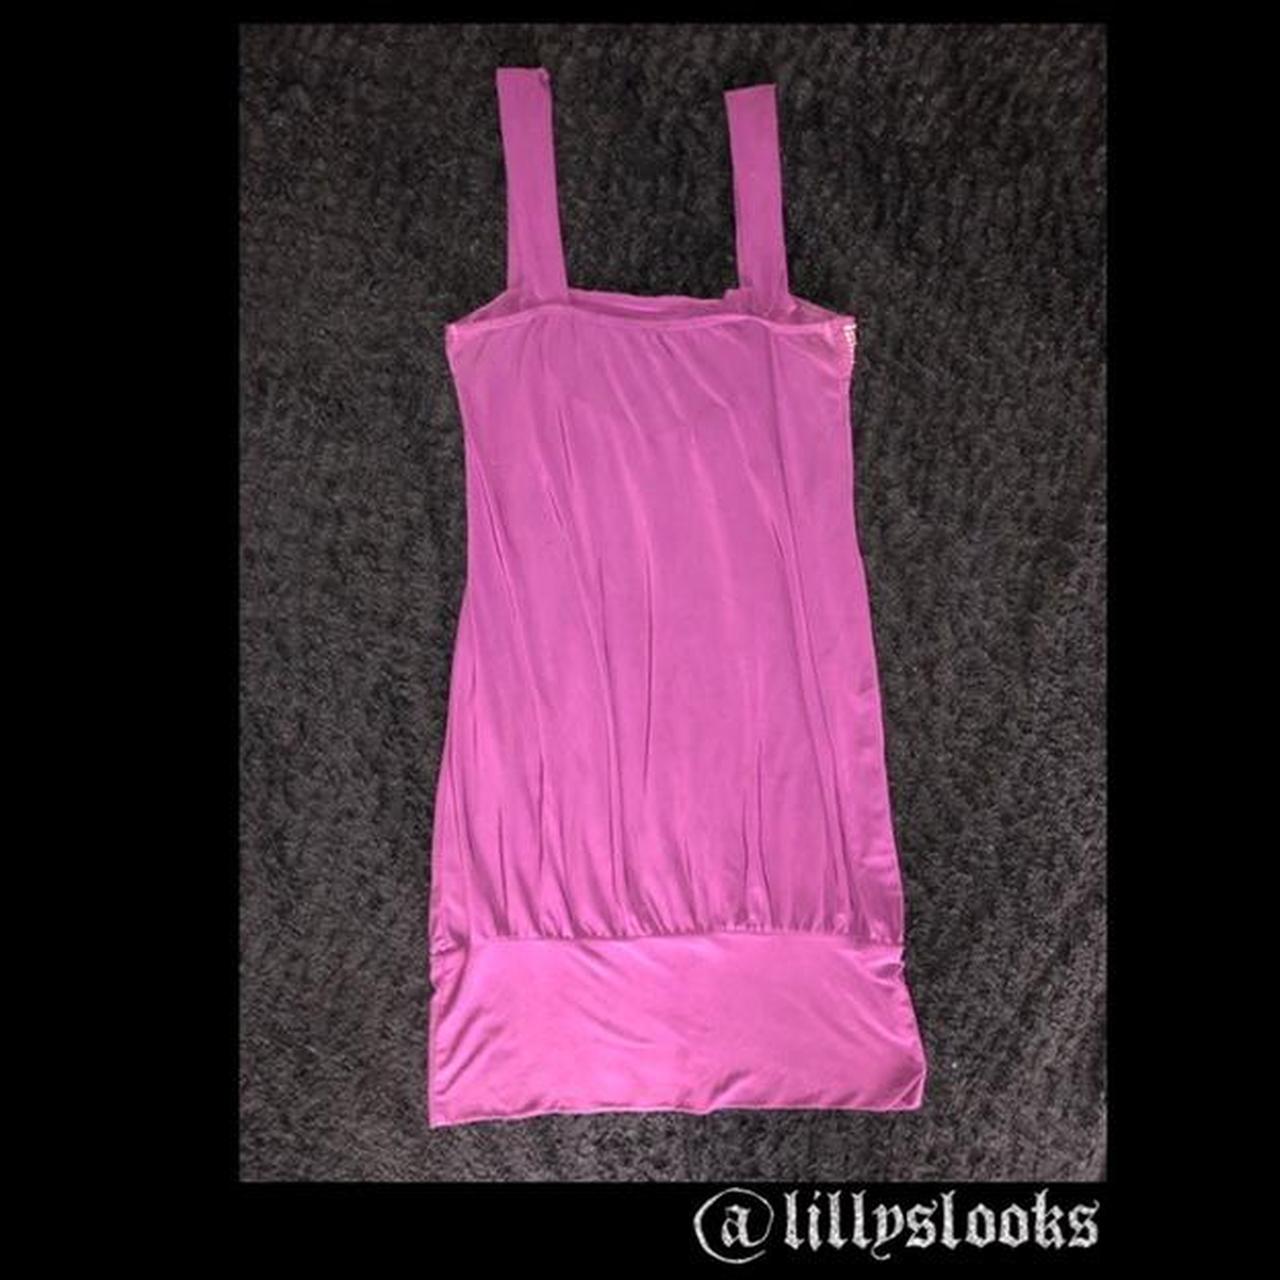 Product Image 2 - !
Purple Y2K kokomax Dress
~the first